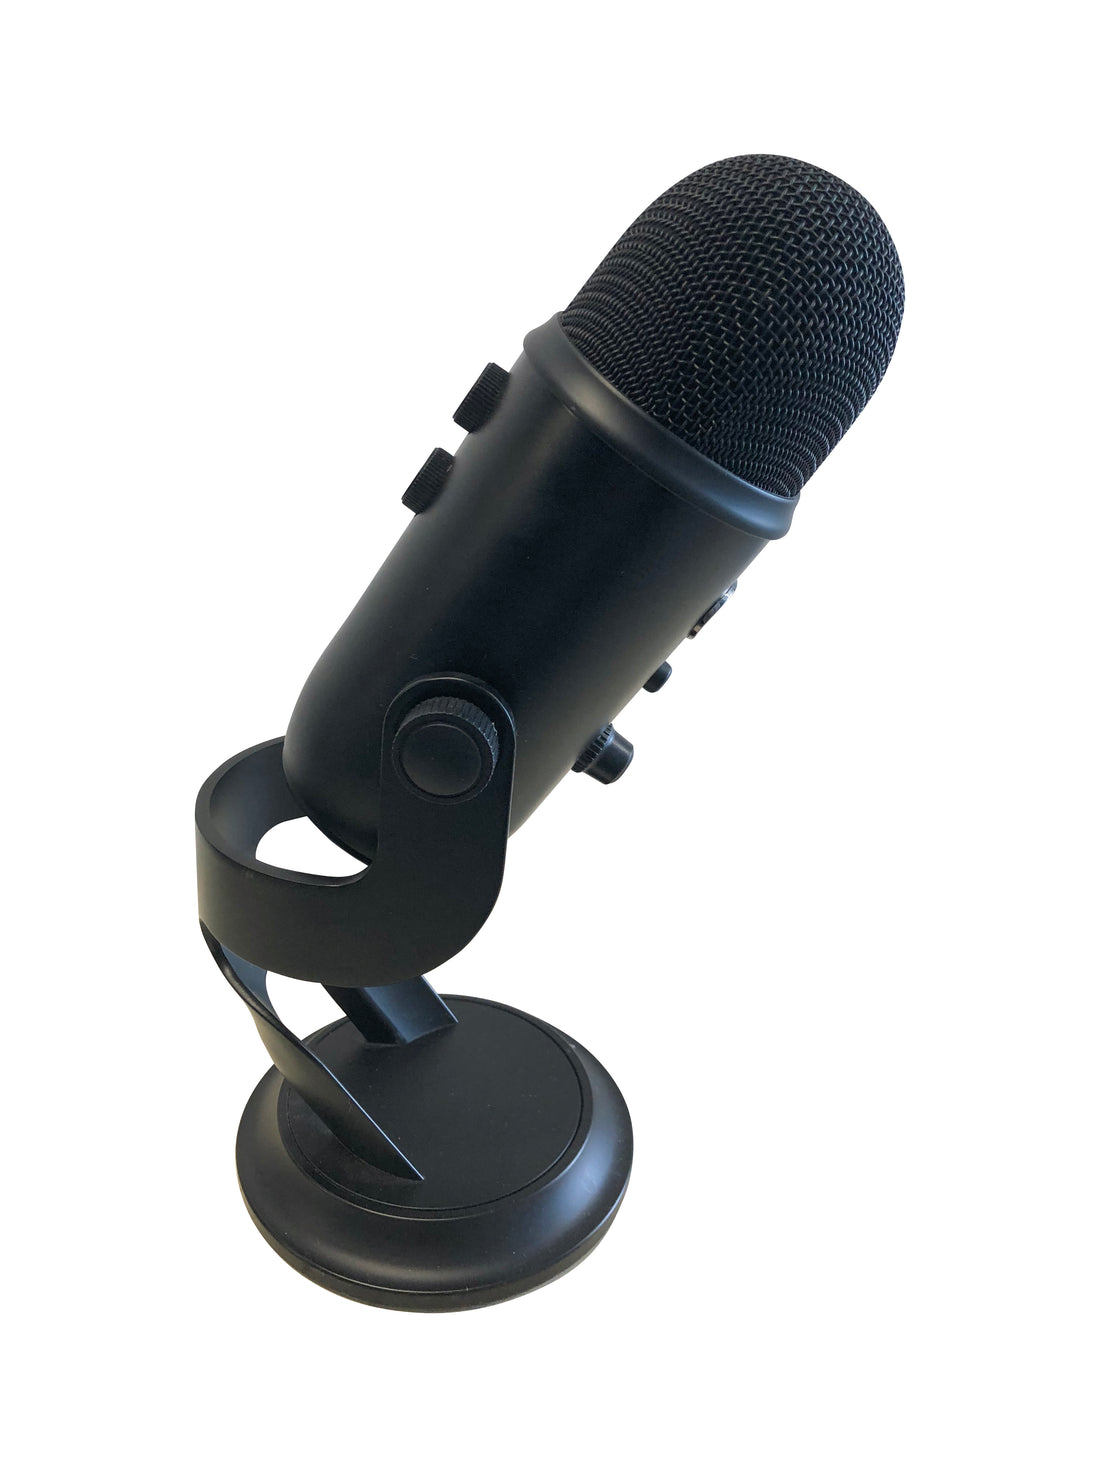 Modern Tabletop Microphone